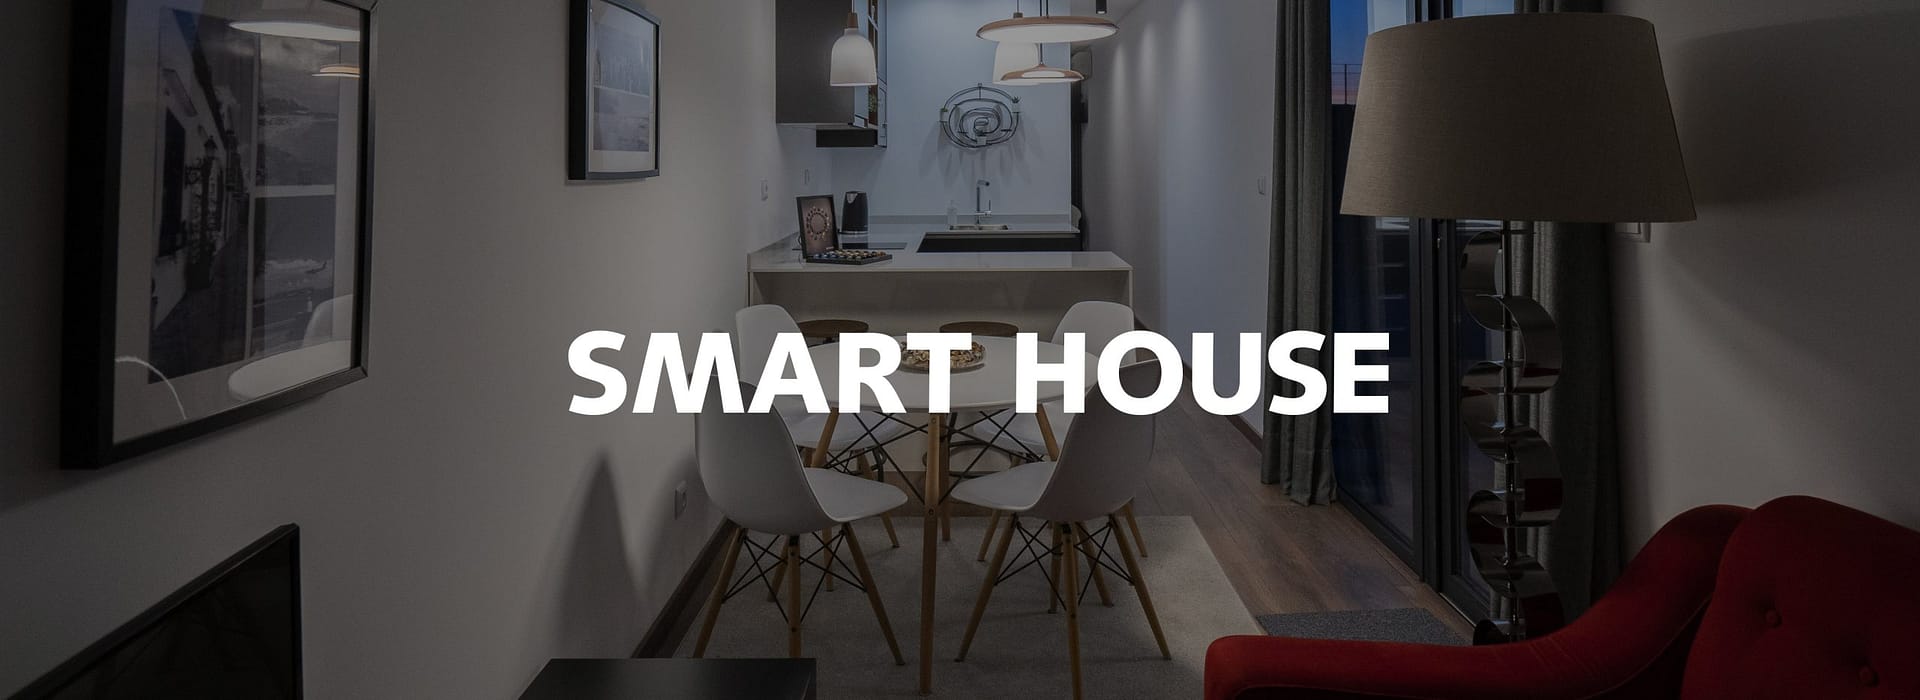 Smart House-min